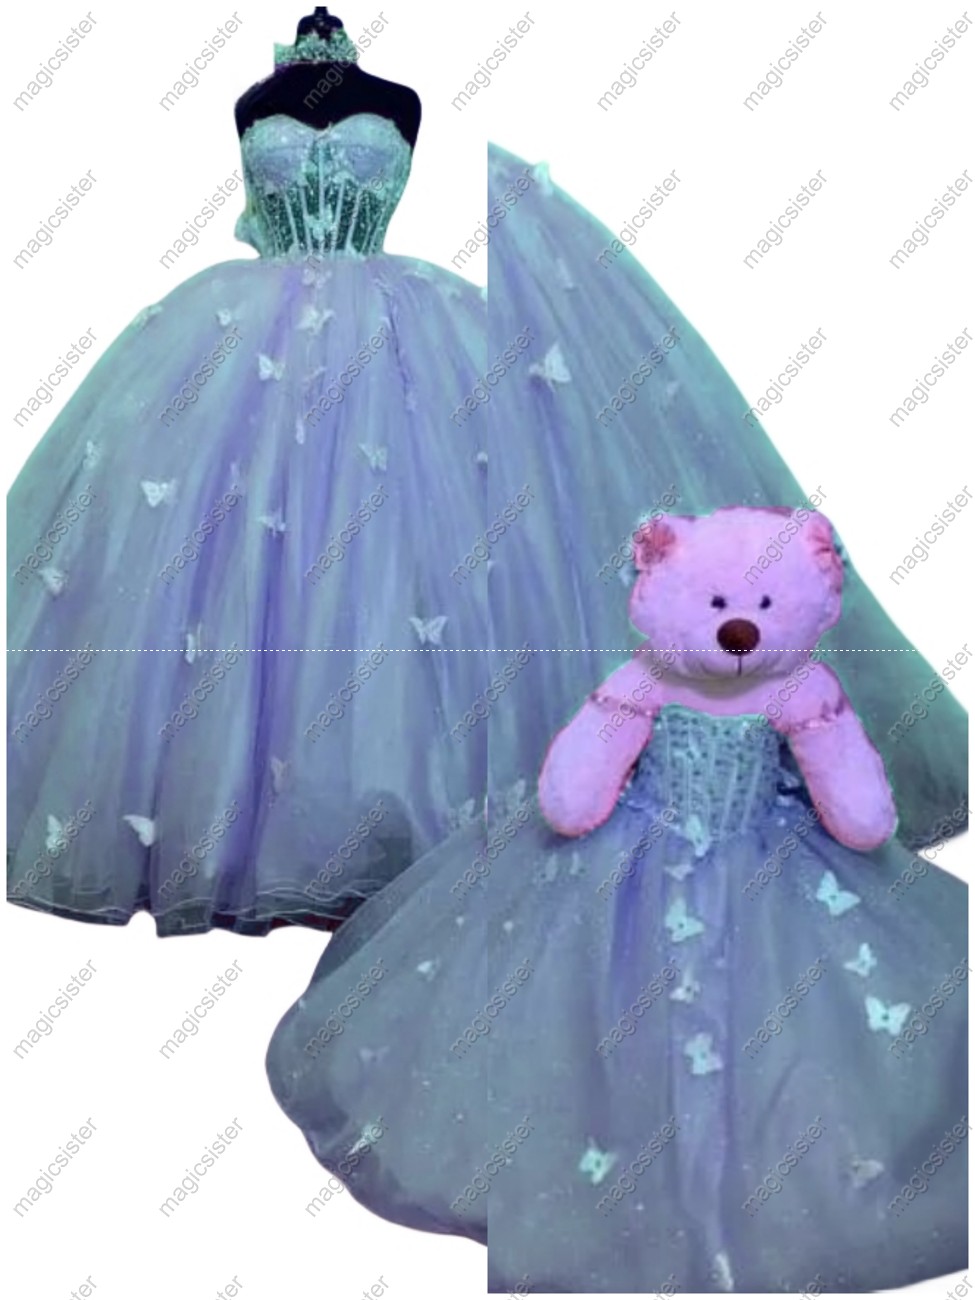 Hotselling Matching Barbie and Bear Dress